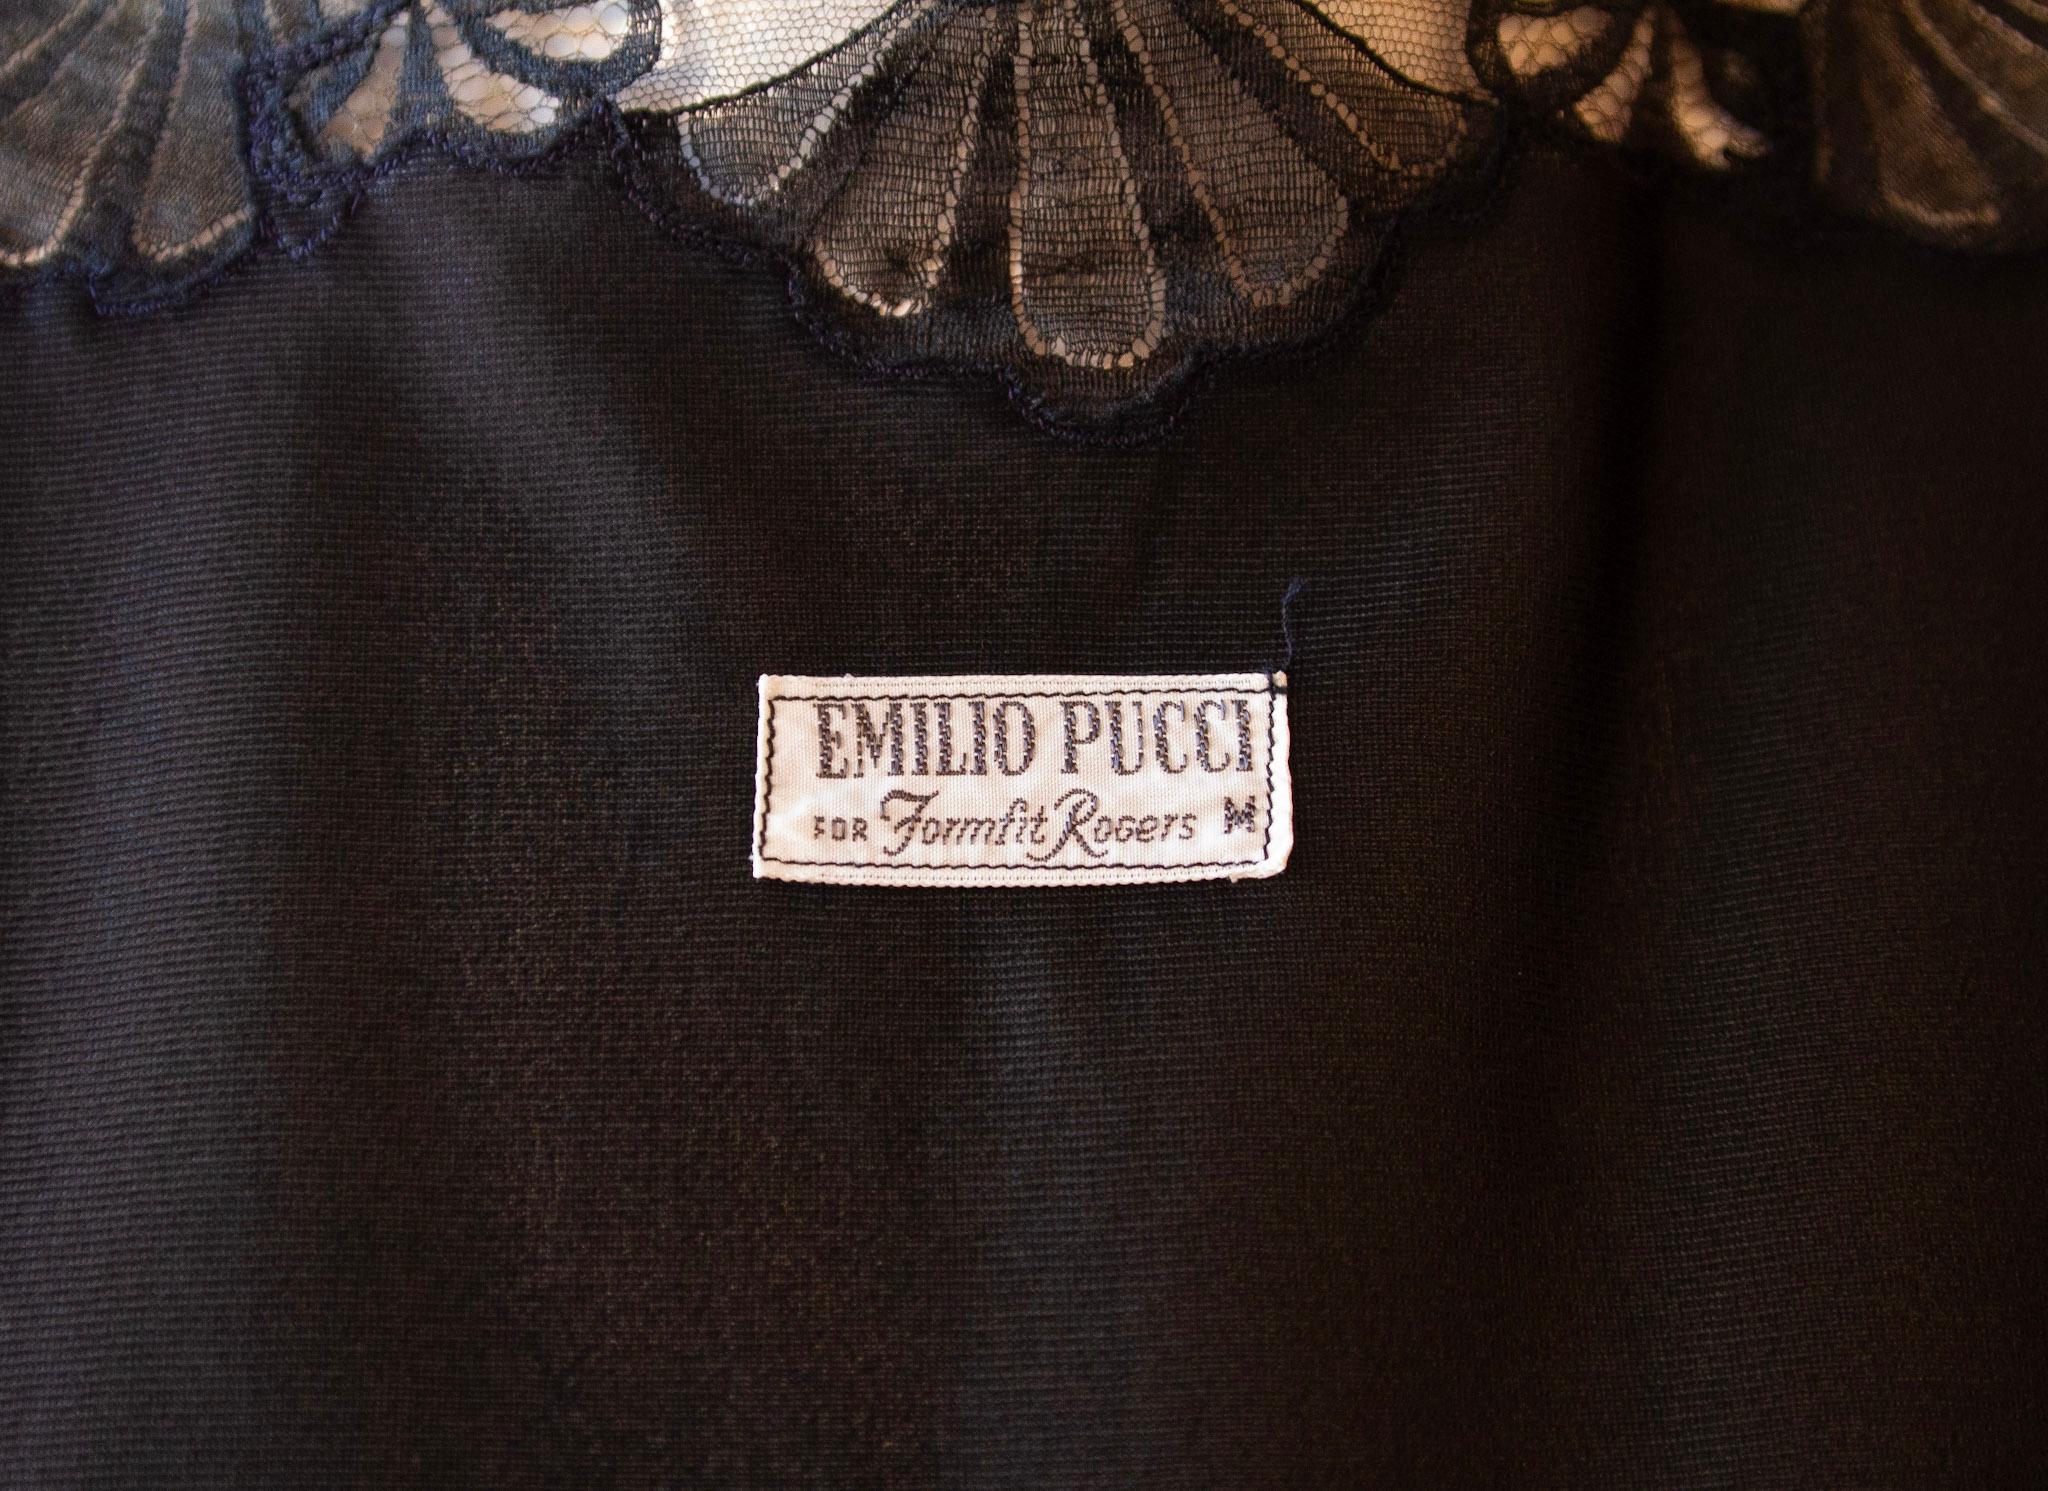 EMILIO PUCCI for Formfit Rogers, Mid-Length Black Silk Button Robe, circa 1960 4